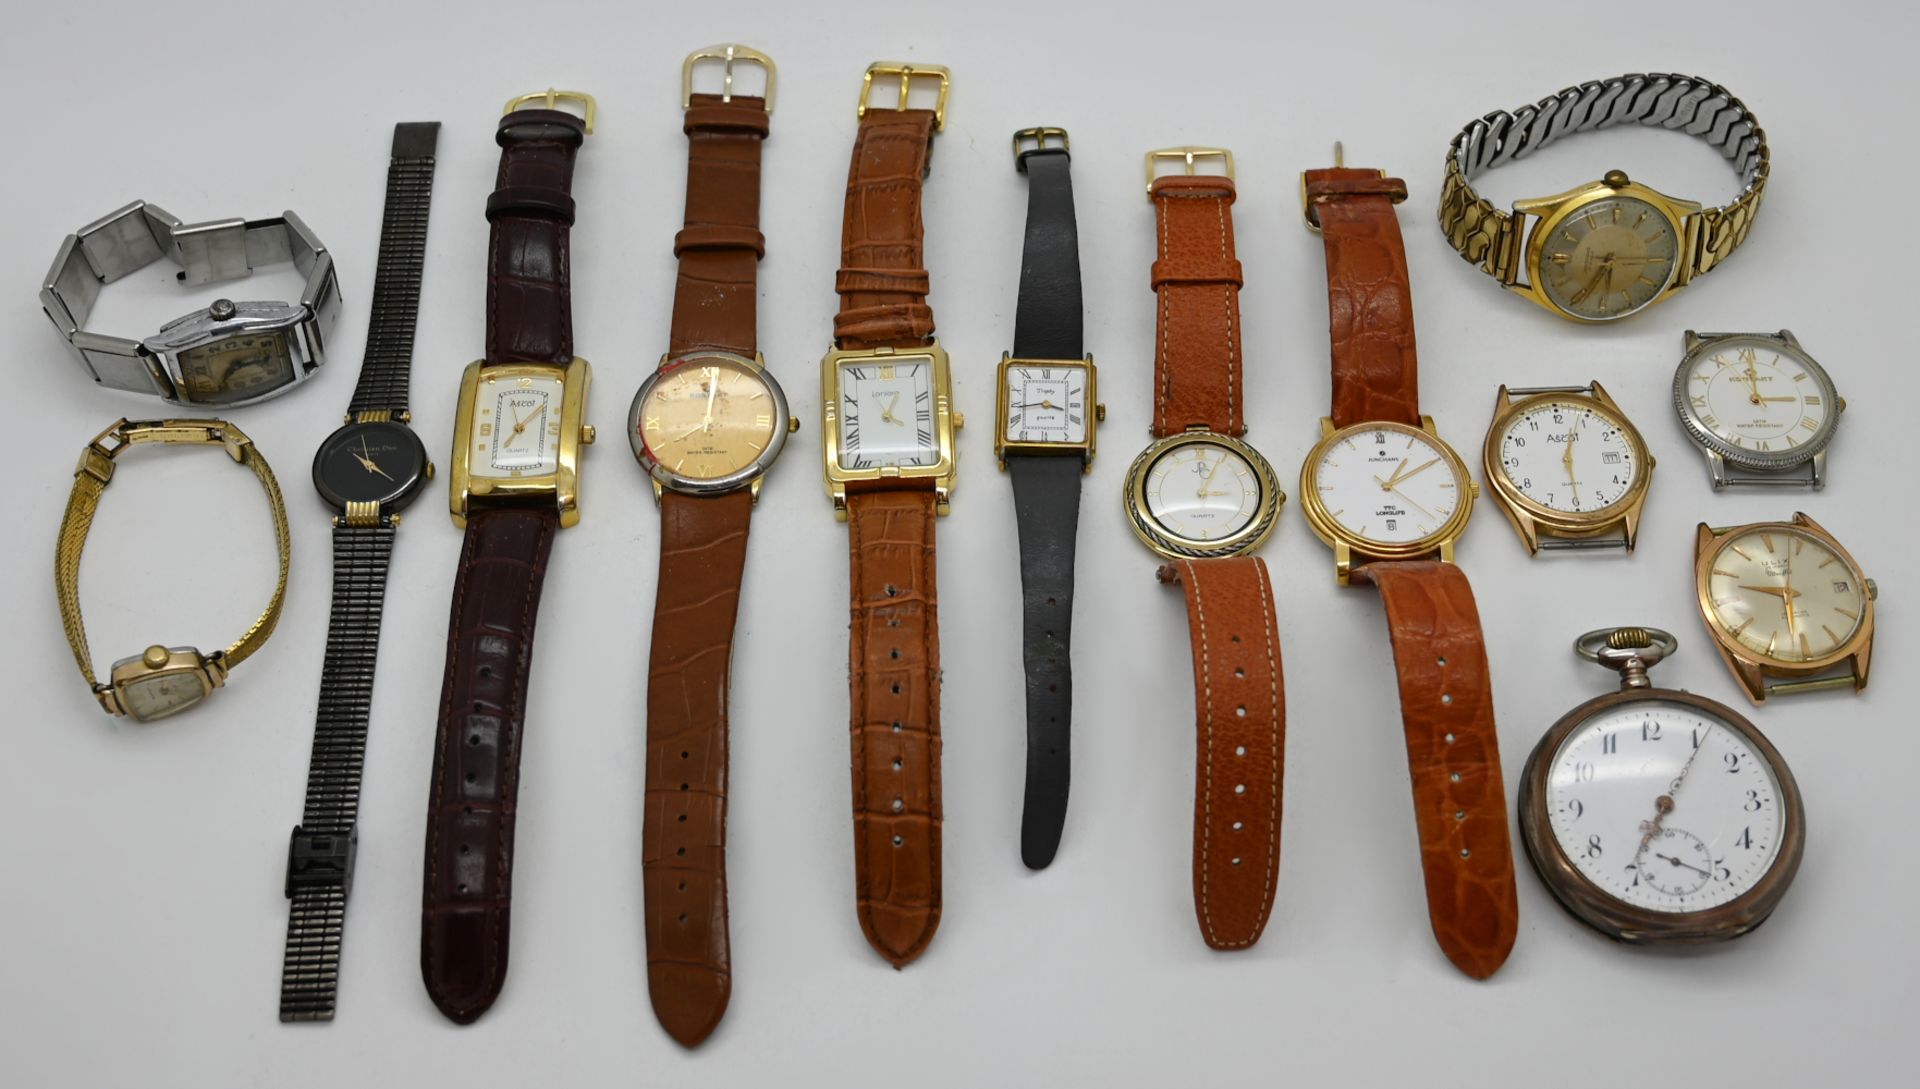 1 Taschenuhr um 1900, Silber, besch., 2 Armbanduhren jeweils JUNGHANS, jeweils Metall z.T. vergoldet